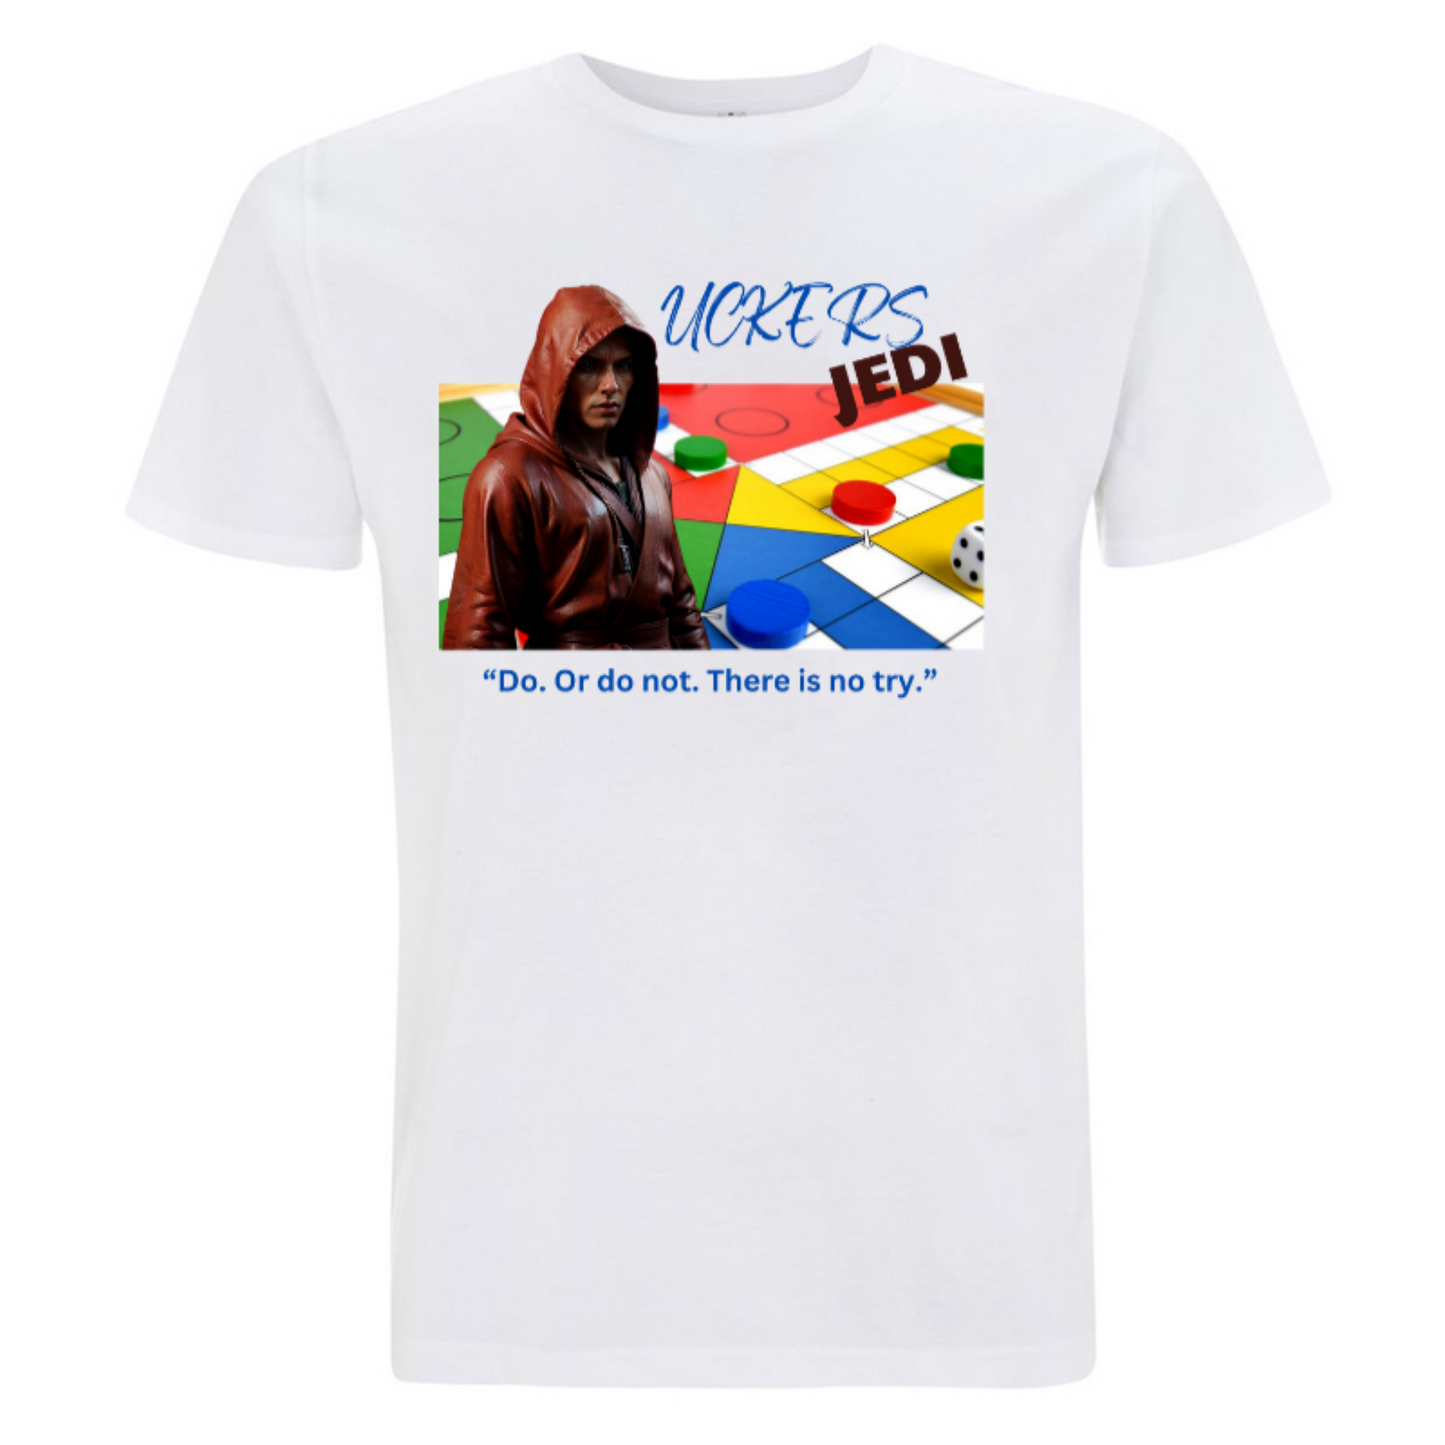 Men's organic T-shirt with printed 'Uckers Jedi' design